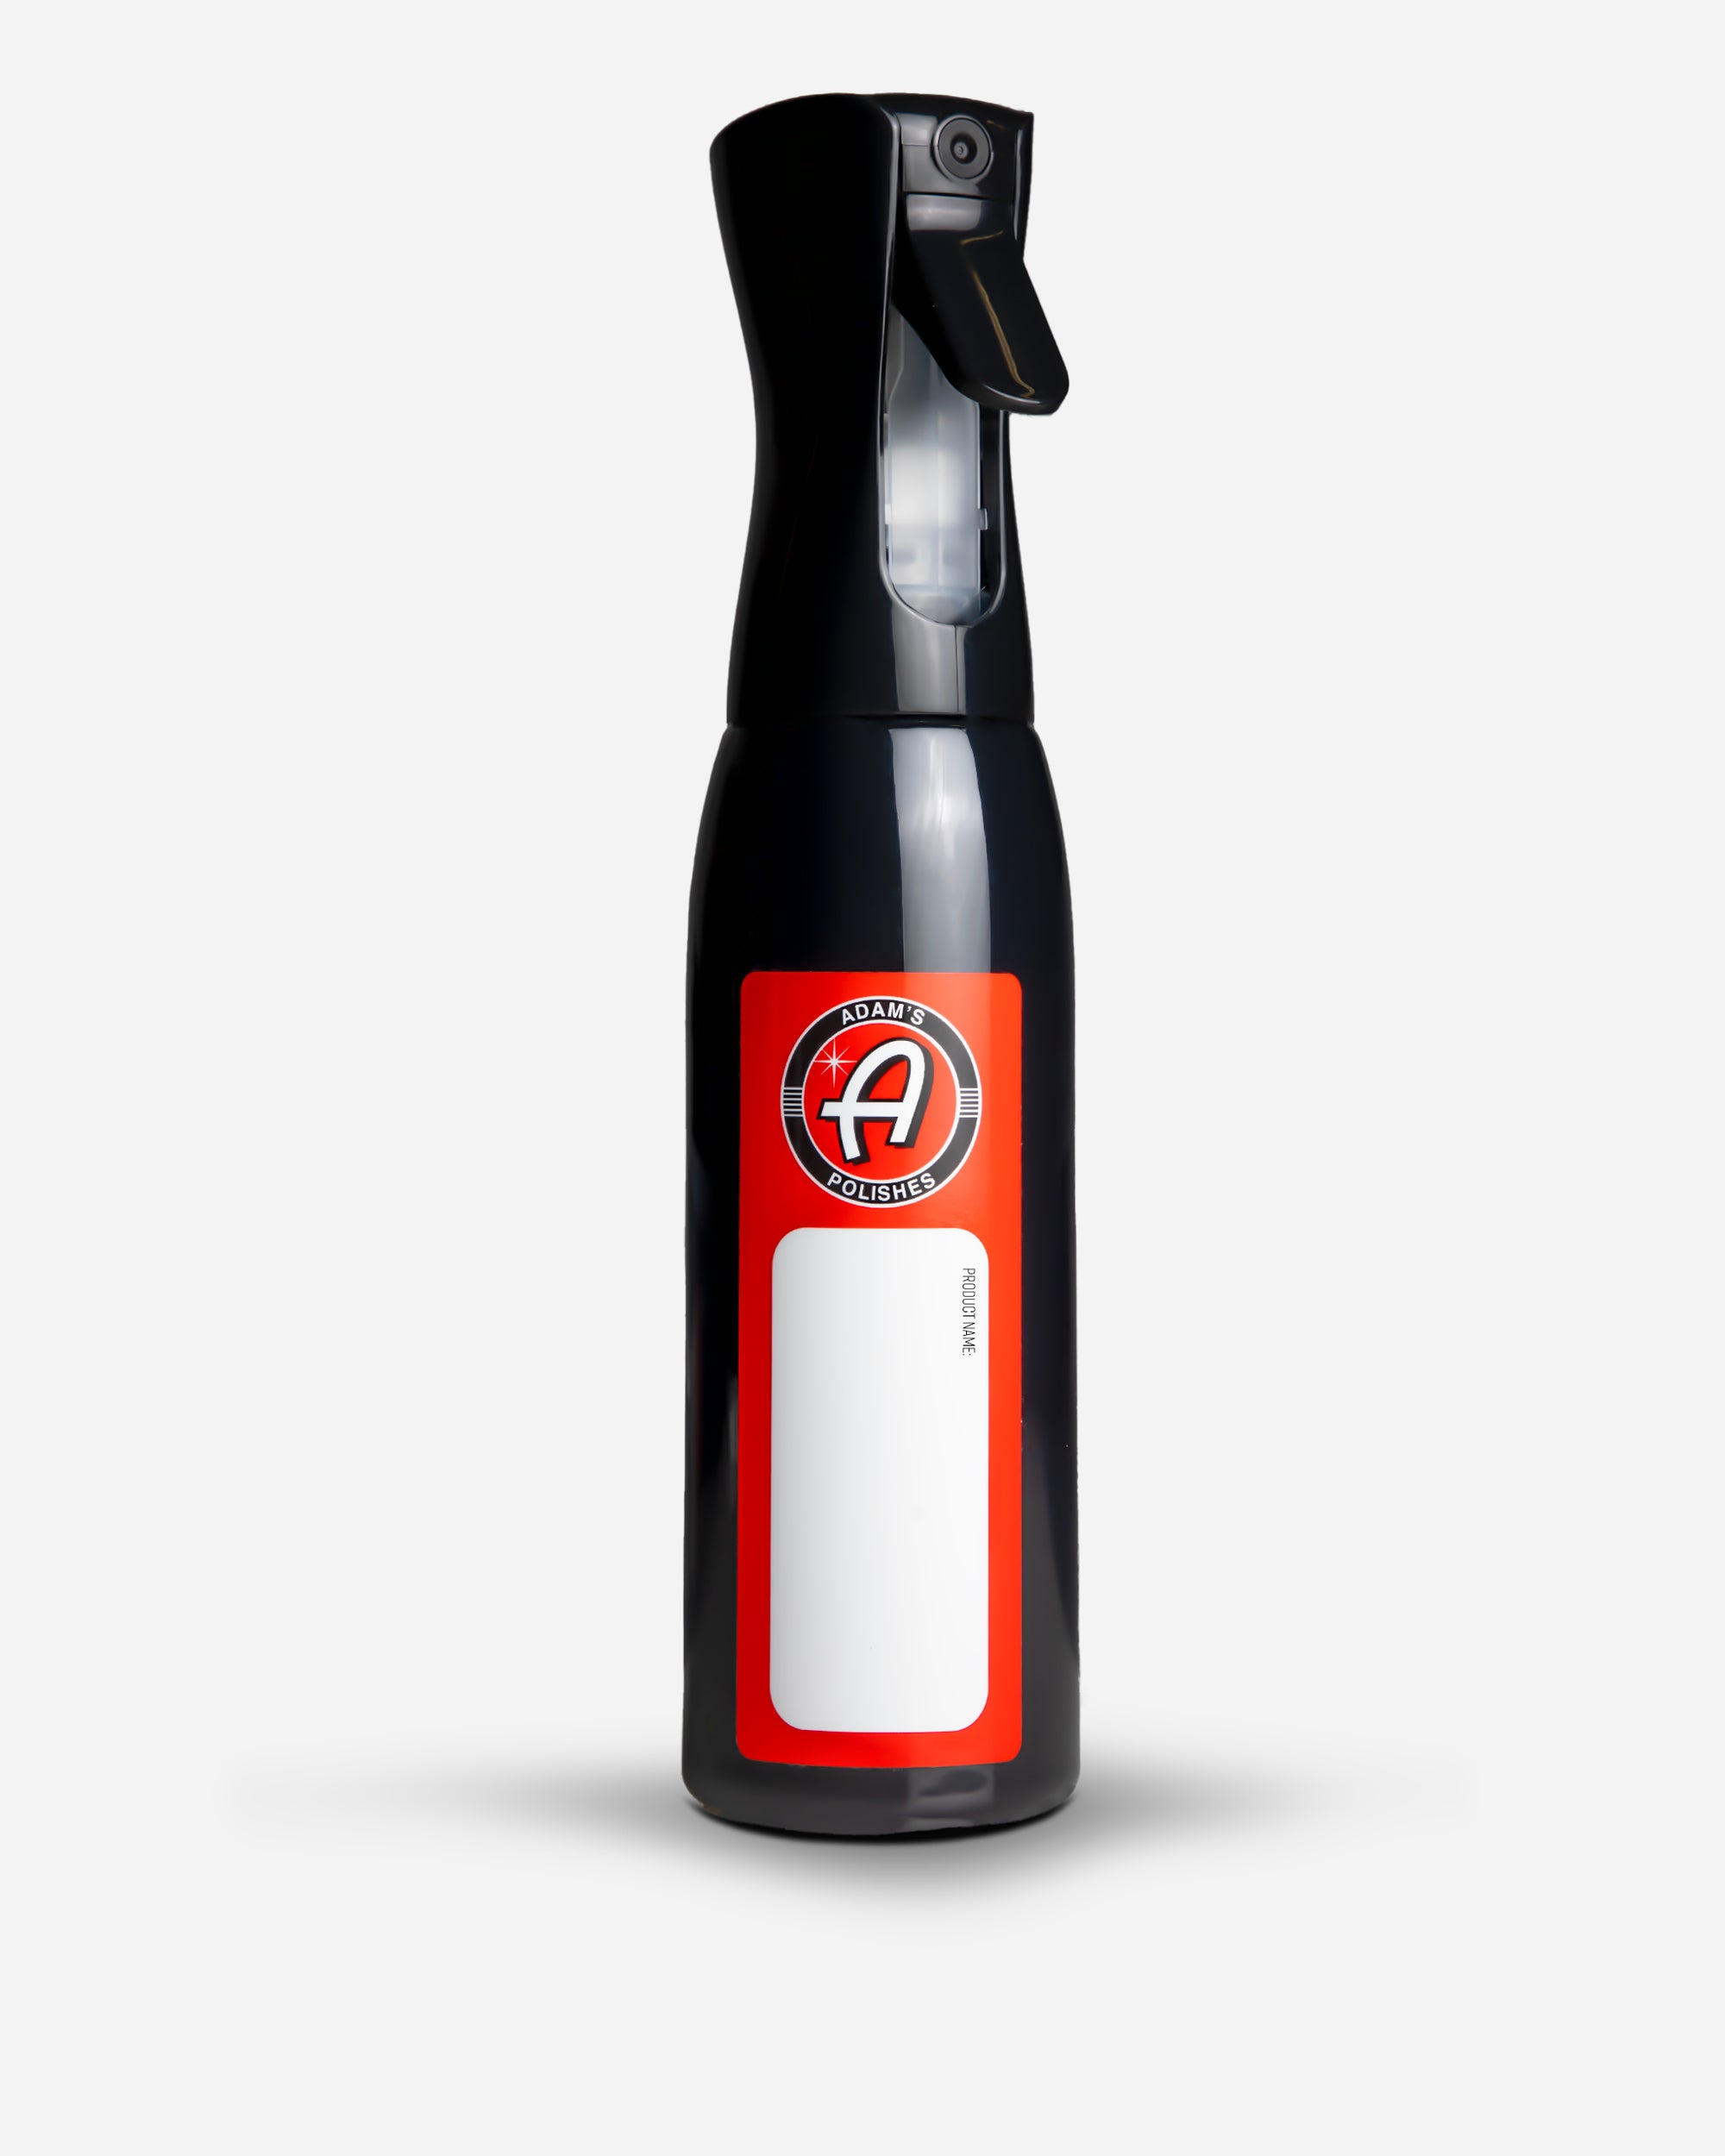 Adams Adamâ S IK Pro 2 Foaming Pump Sprayer - Pressure Foam Sprayer for Car Cleaning Kit Car Wash Car Det VAR_FM